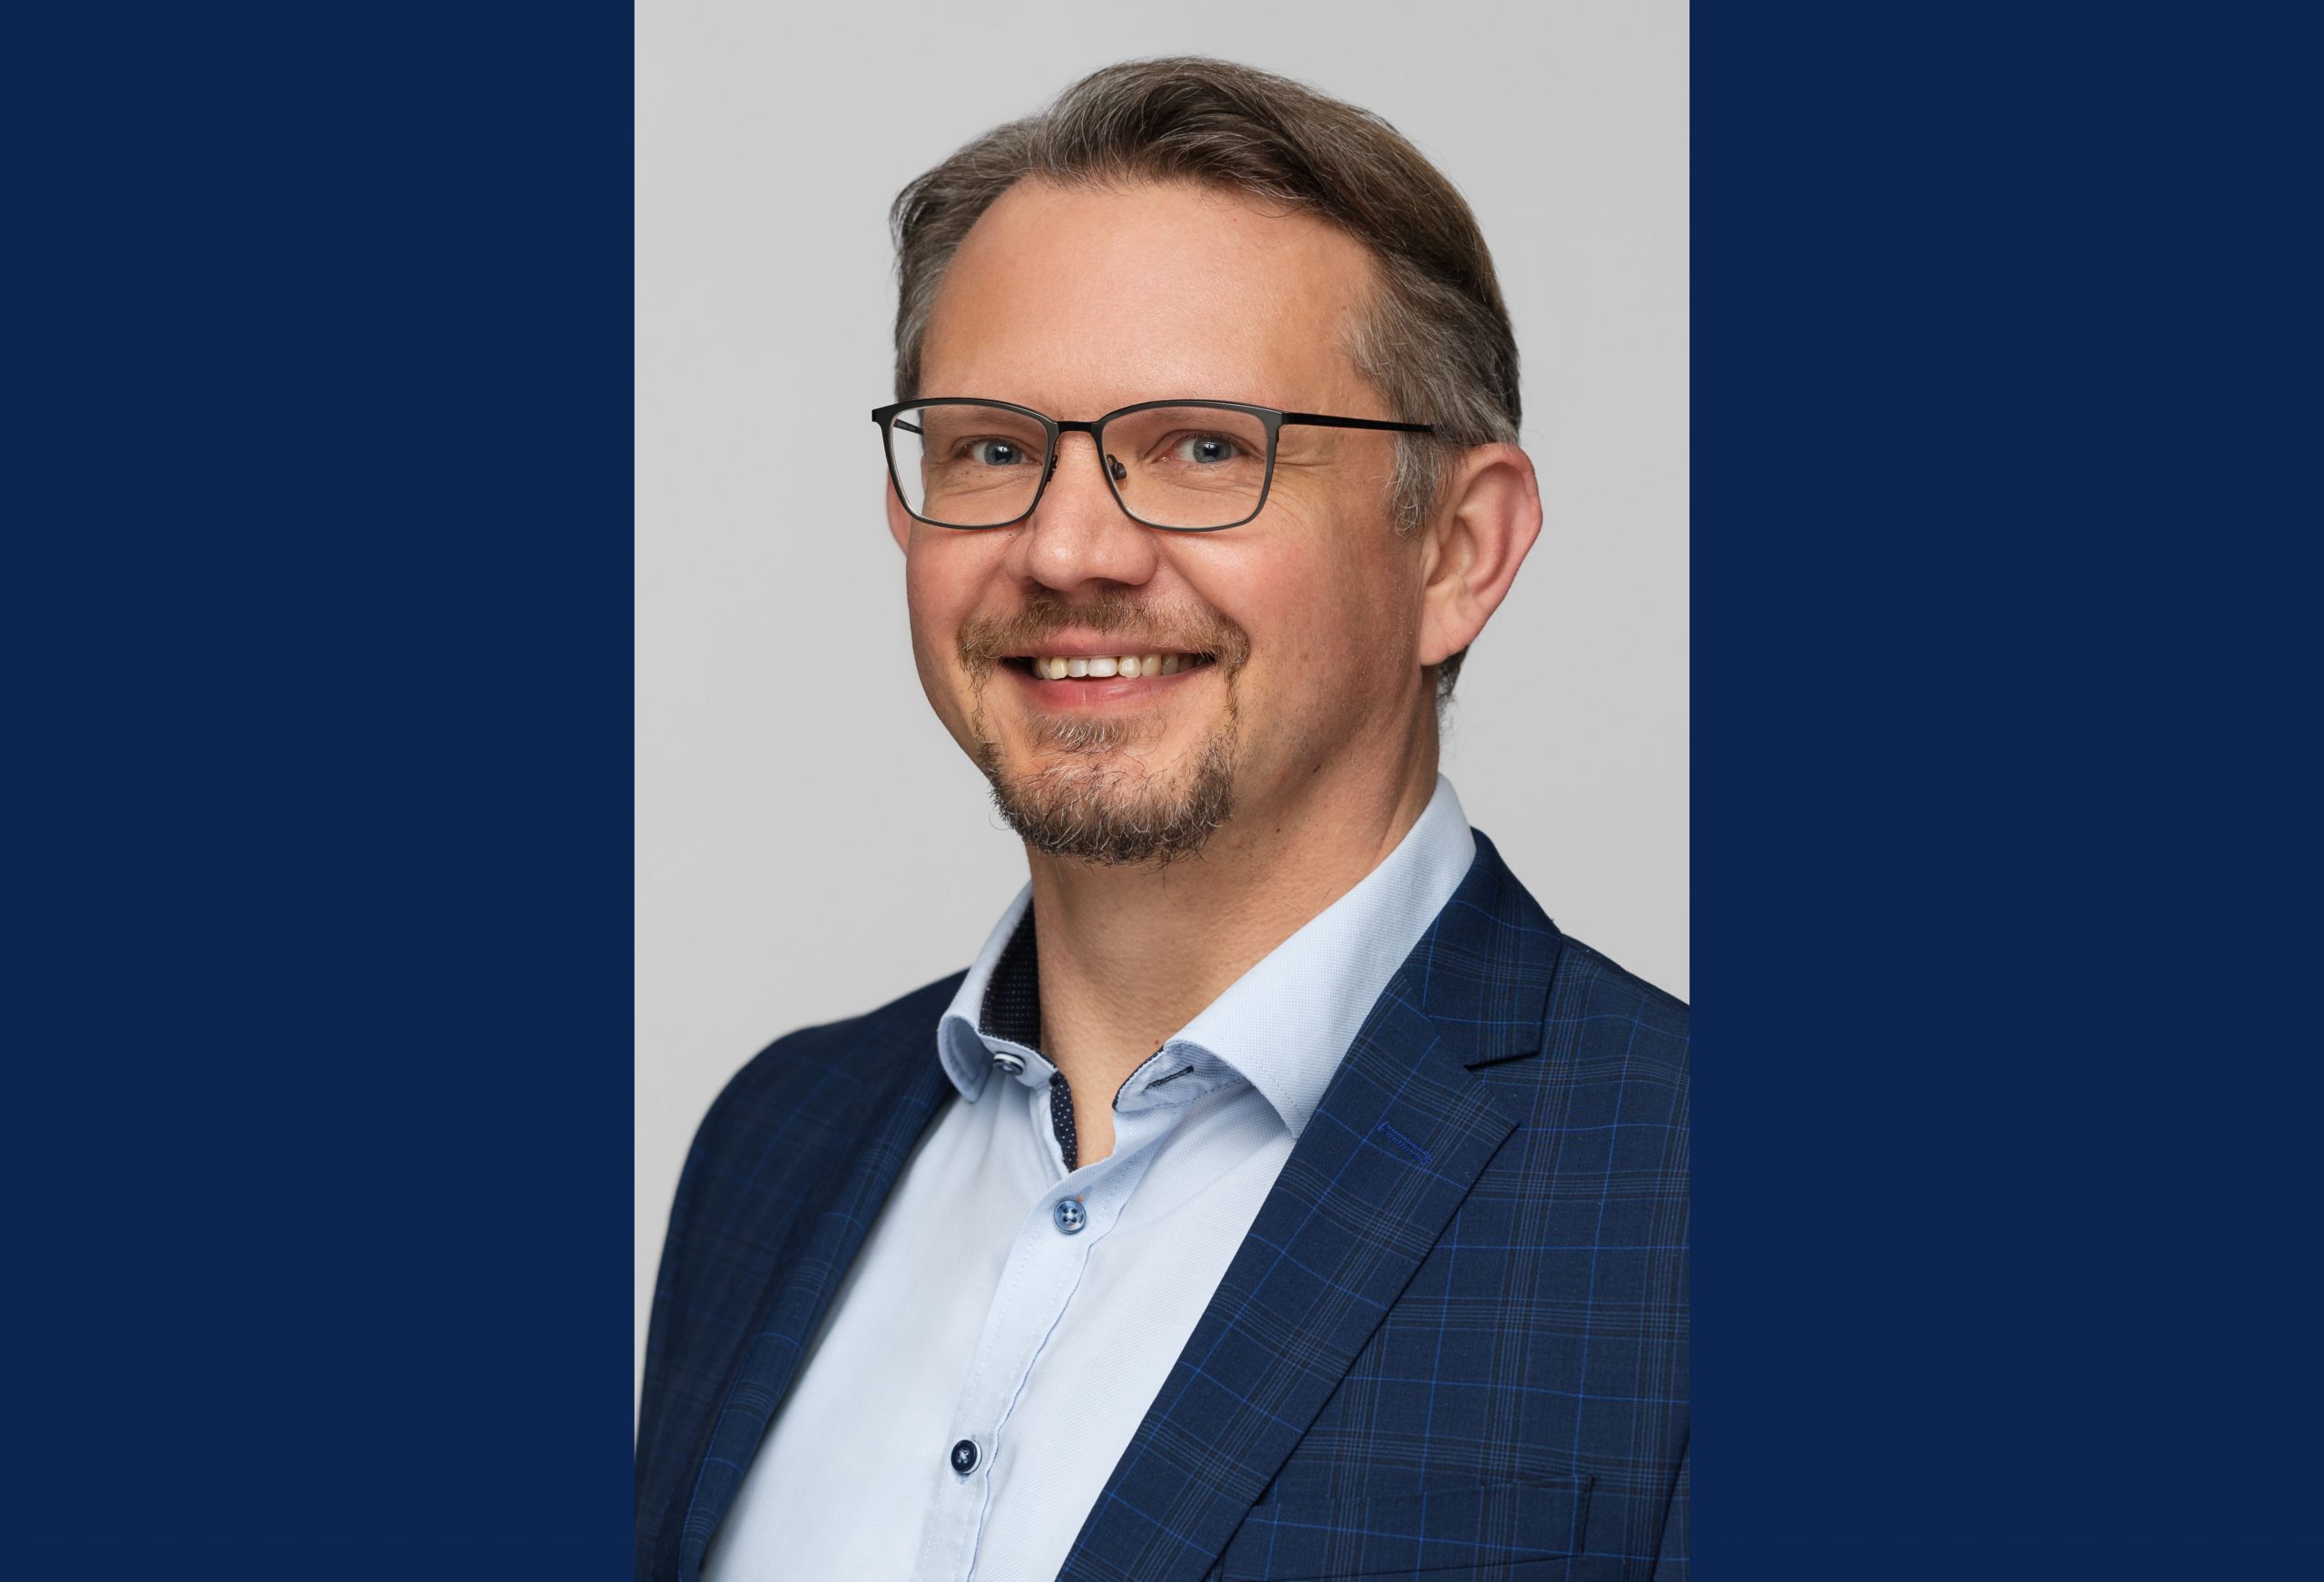 René Forsthuber neuer Managing Director Enterprise Risk Solutions bei Aon Austria